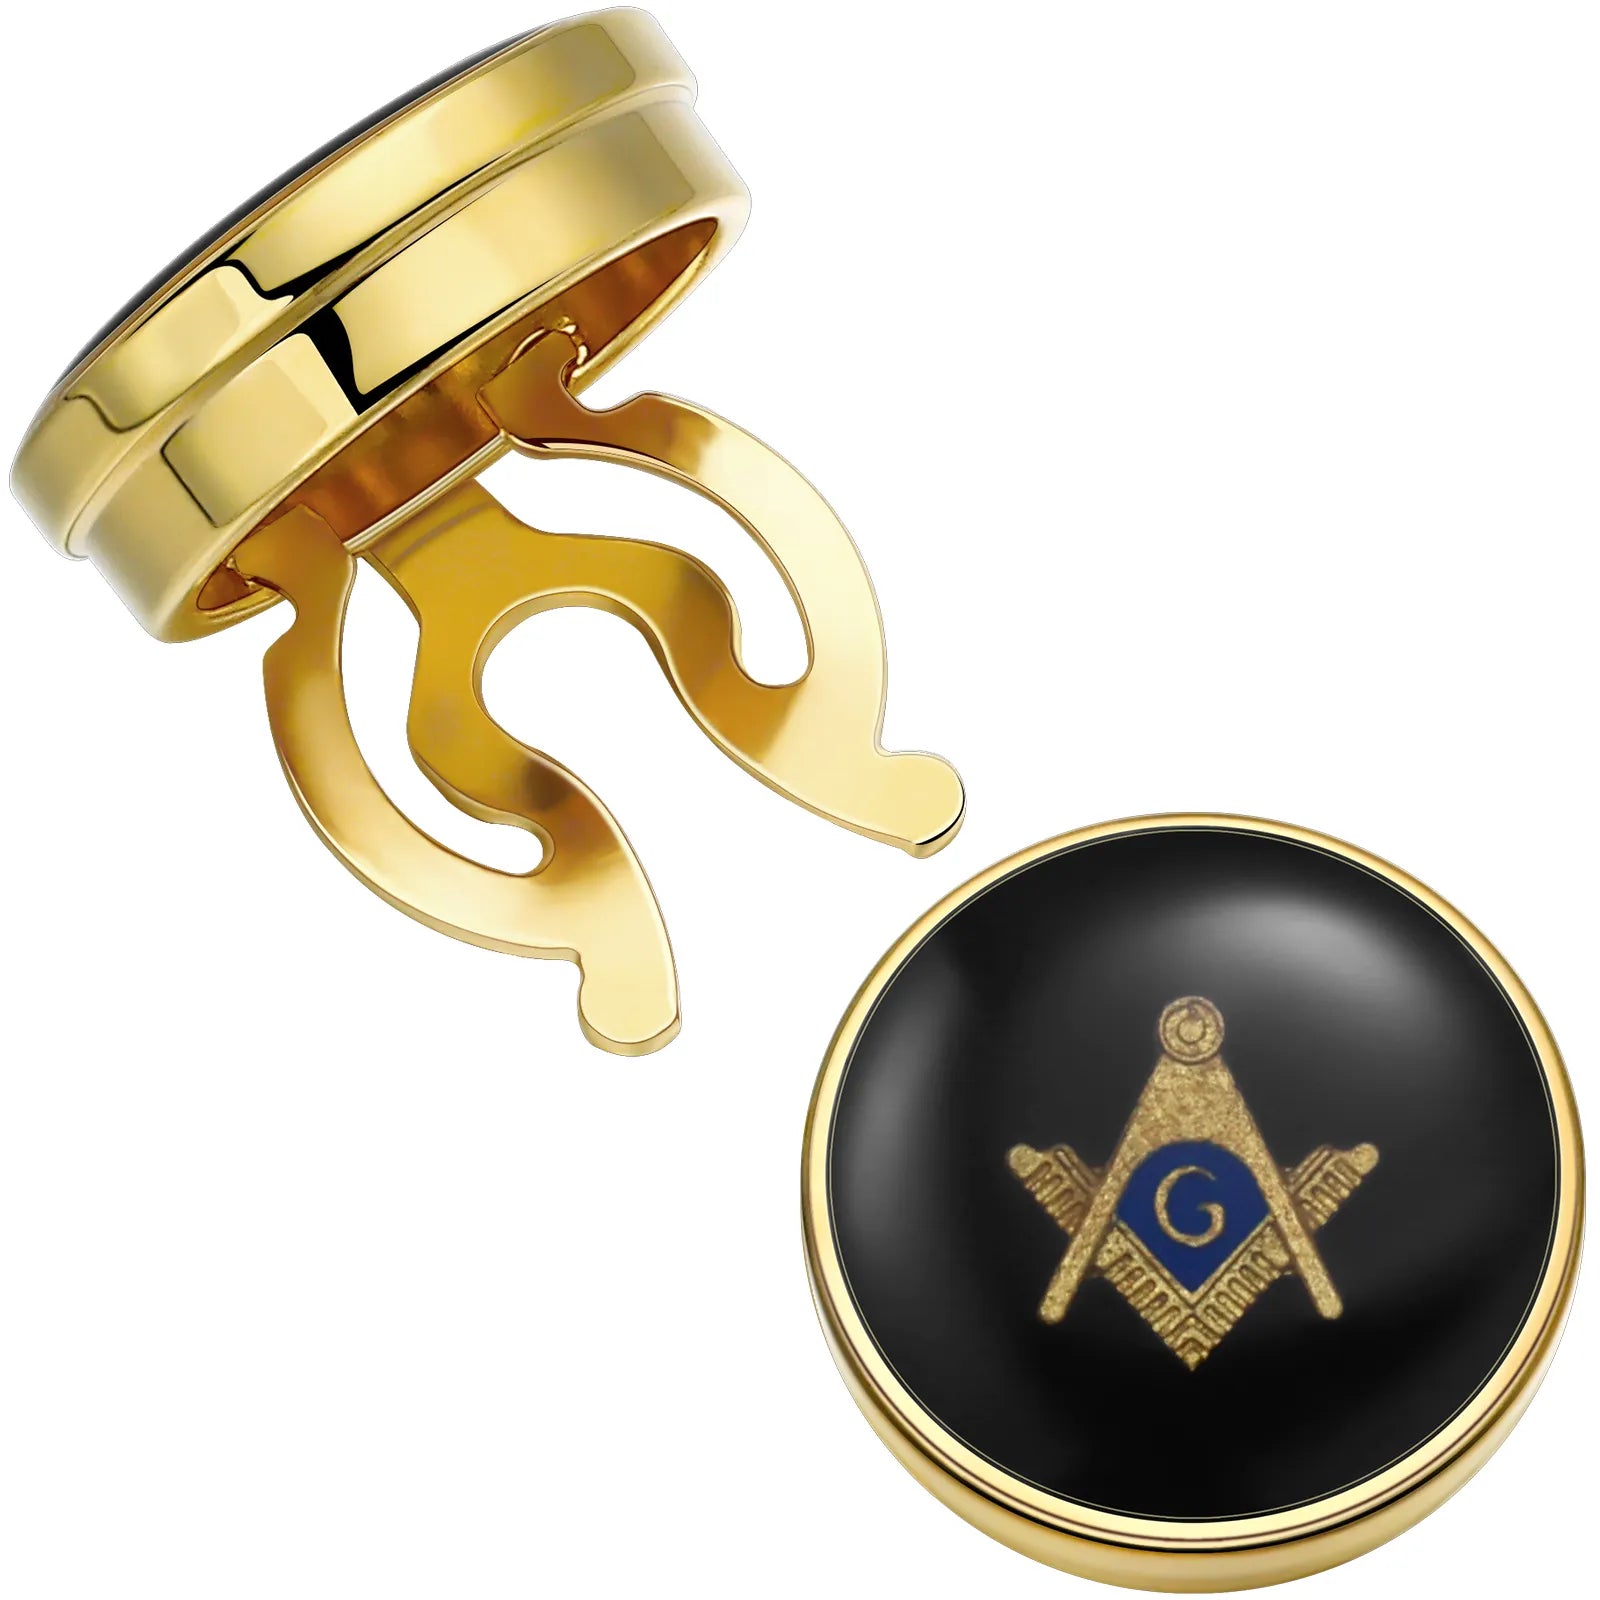 Master Mason Blue Lodge Button Covers - Black & Gold Design (One Pair) - Bricks Masons